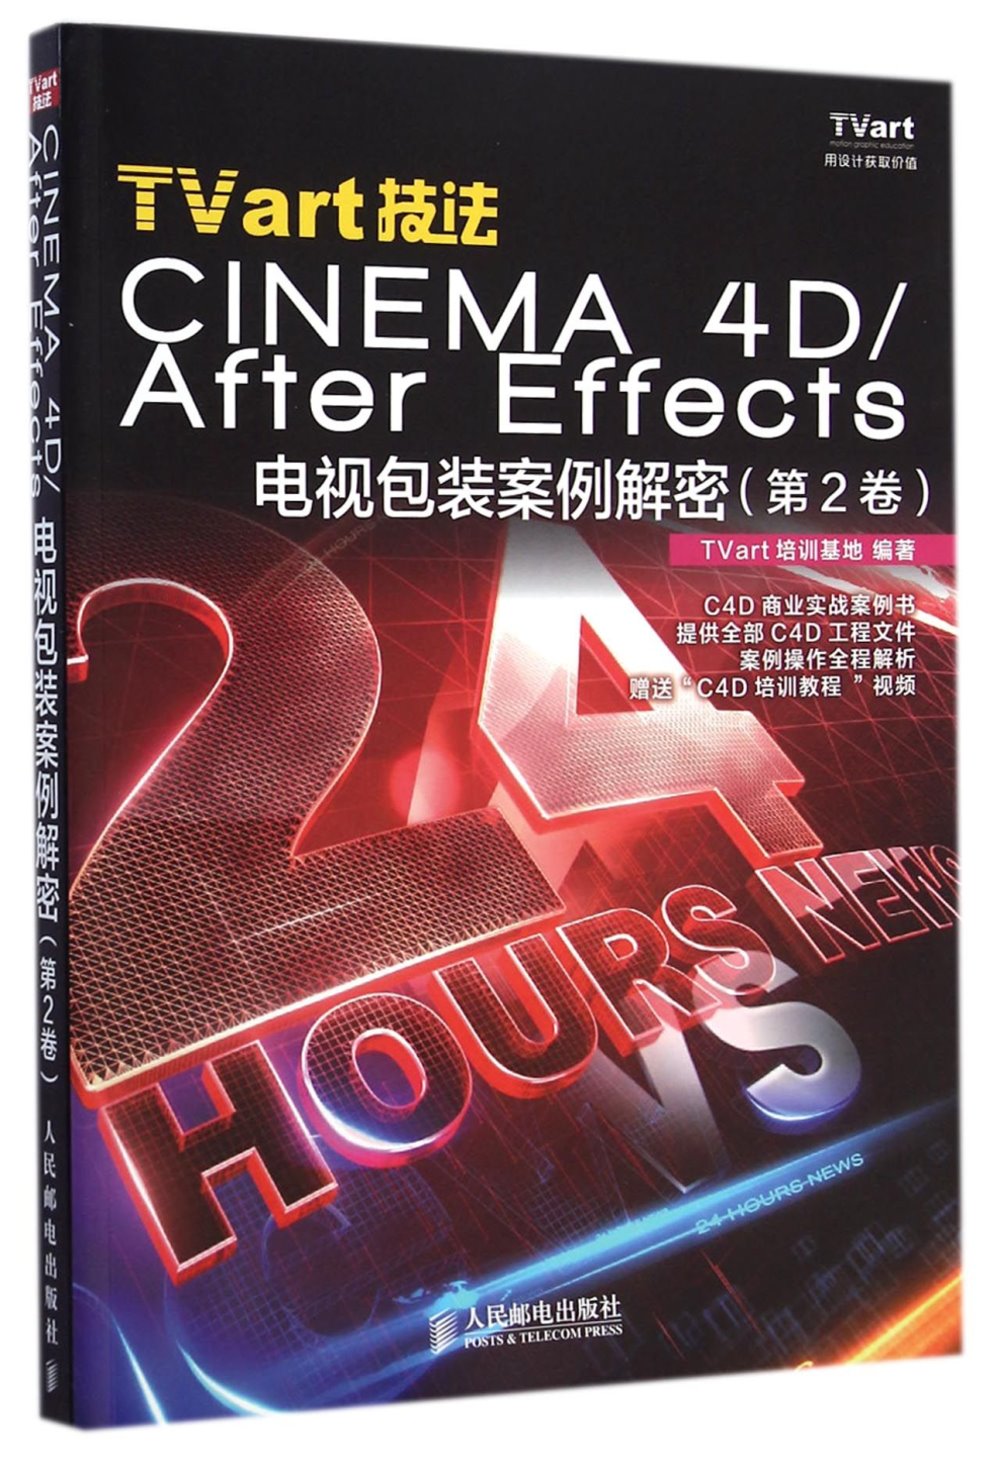 TVart技法：CINEMA 4D/After Effects 電視包裝案例解密 第2卷